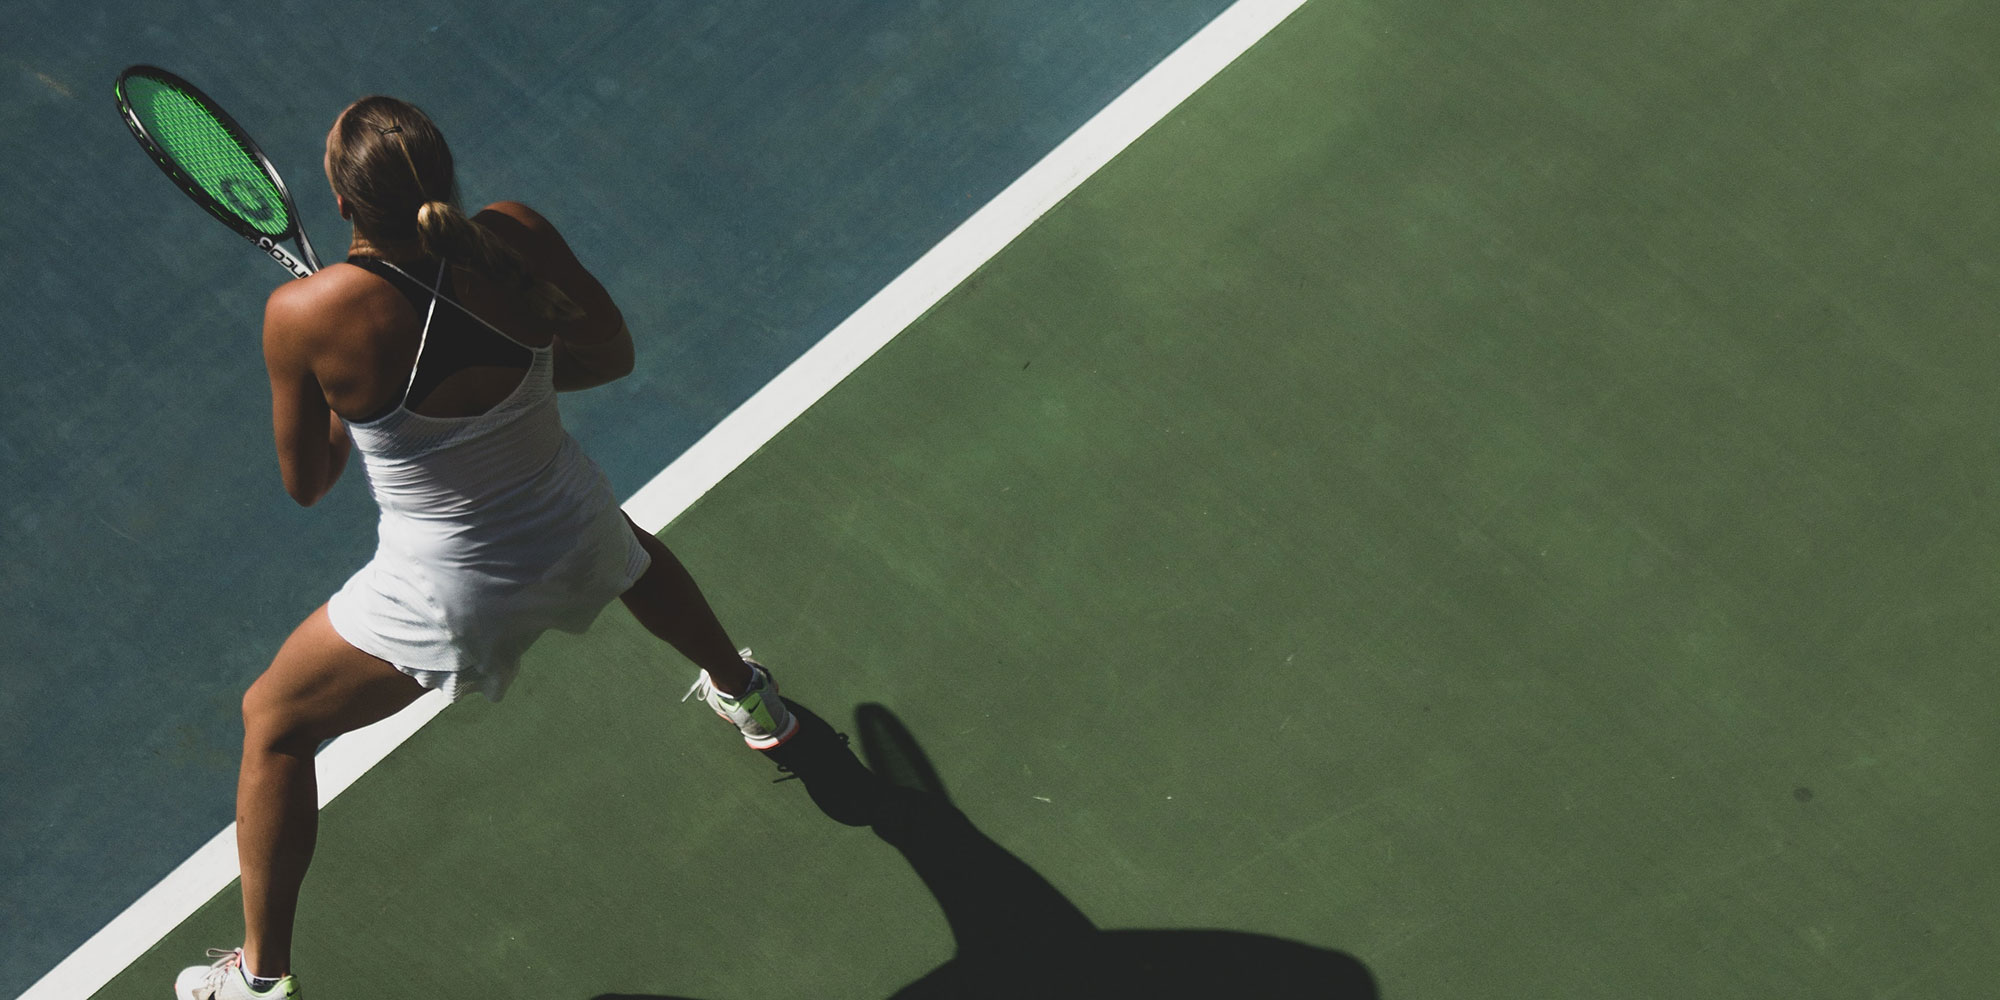 Elite tennis player on court preparing to return a serve